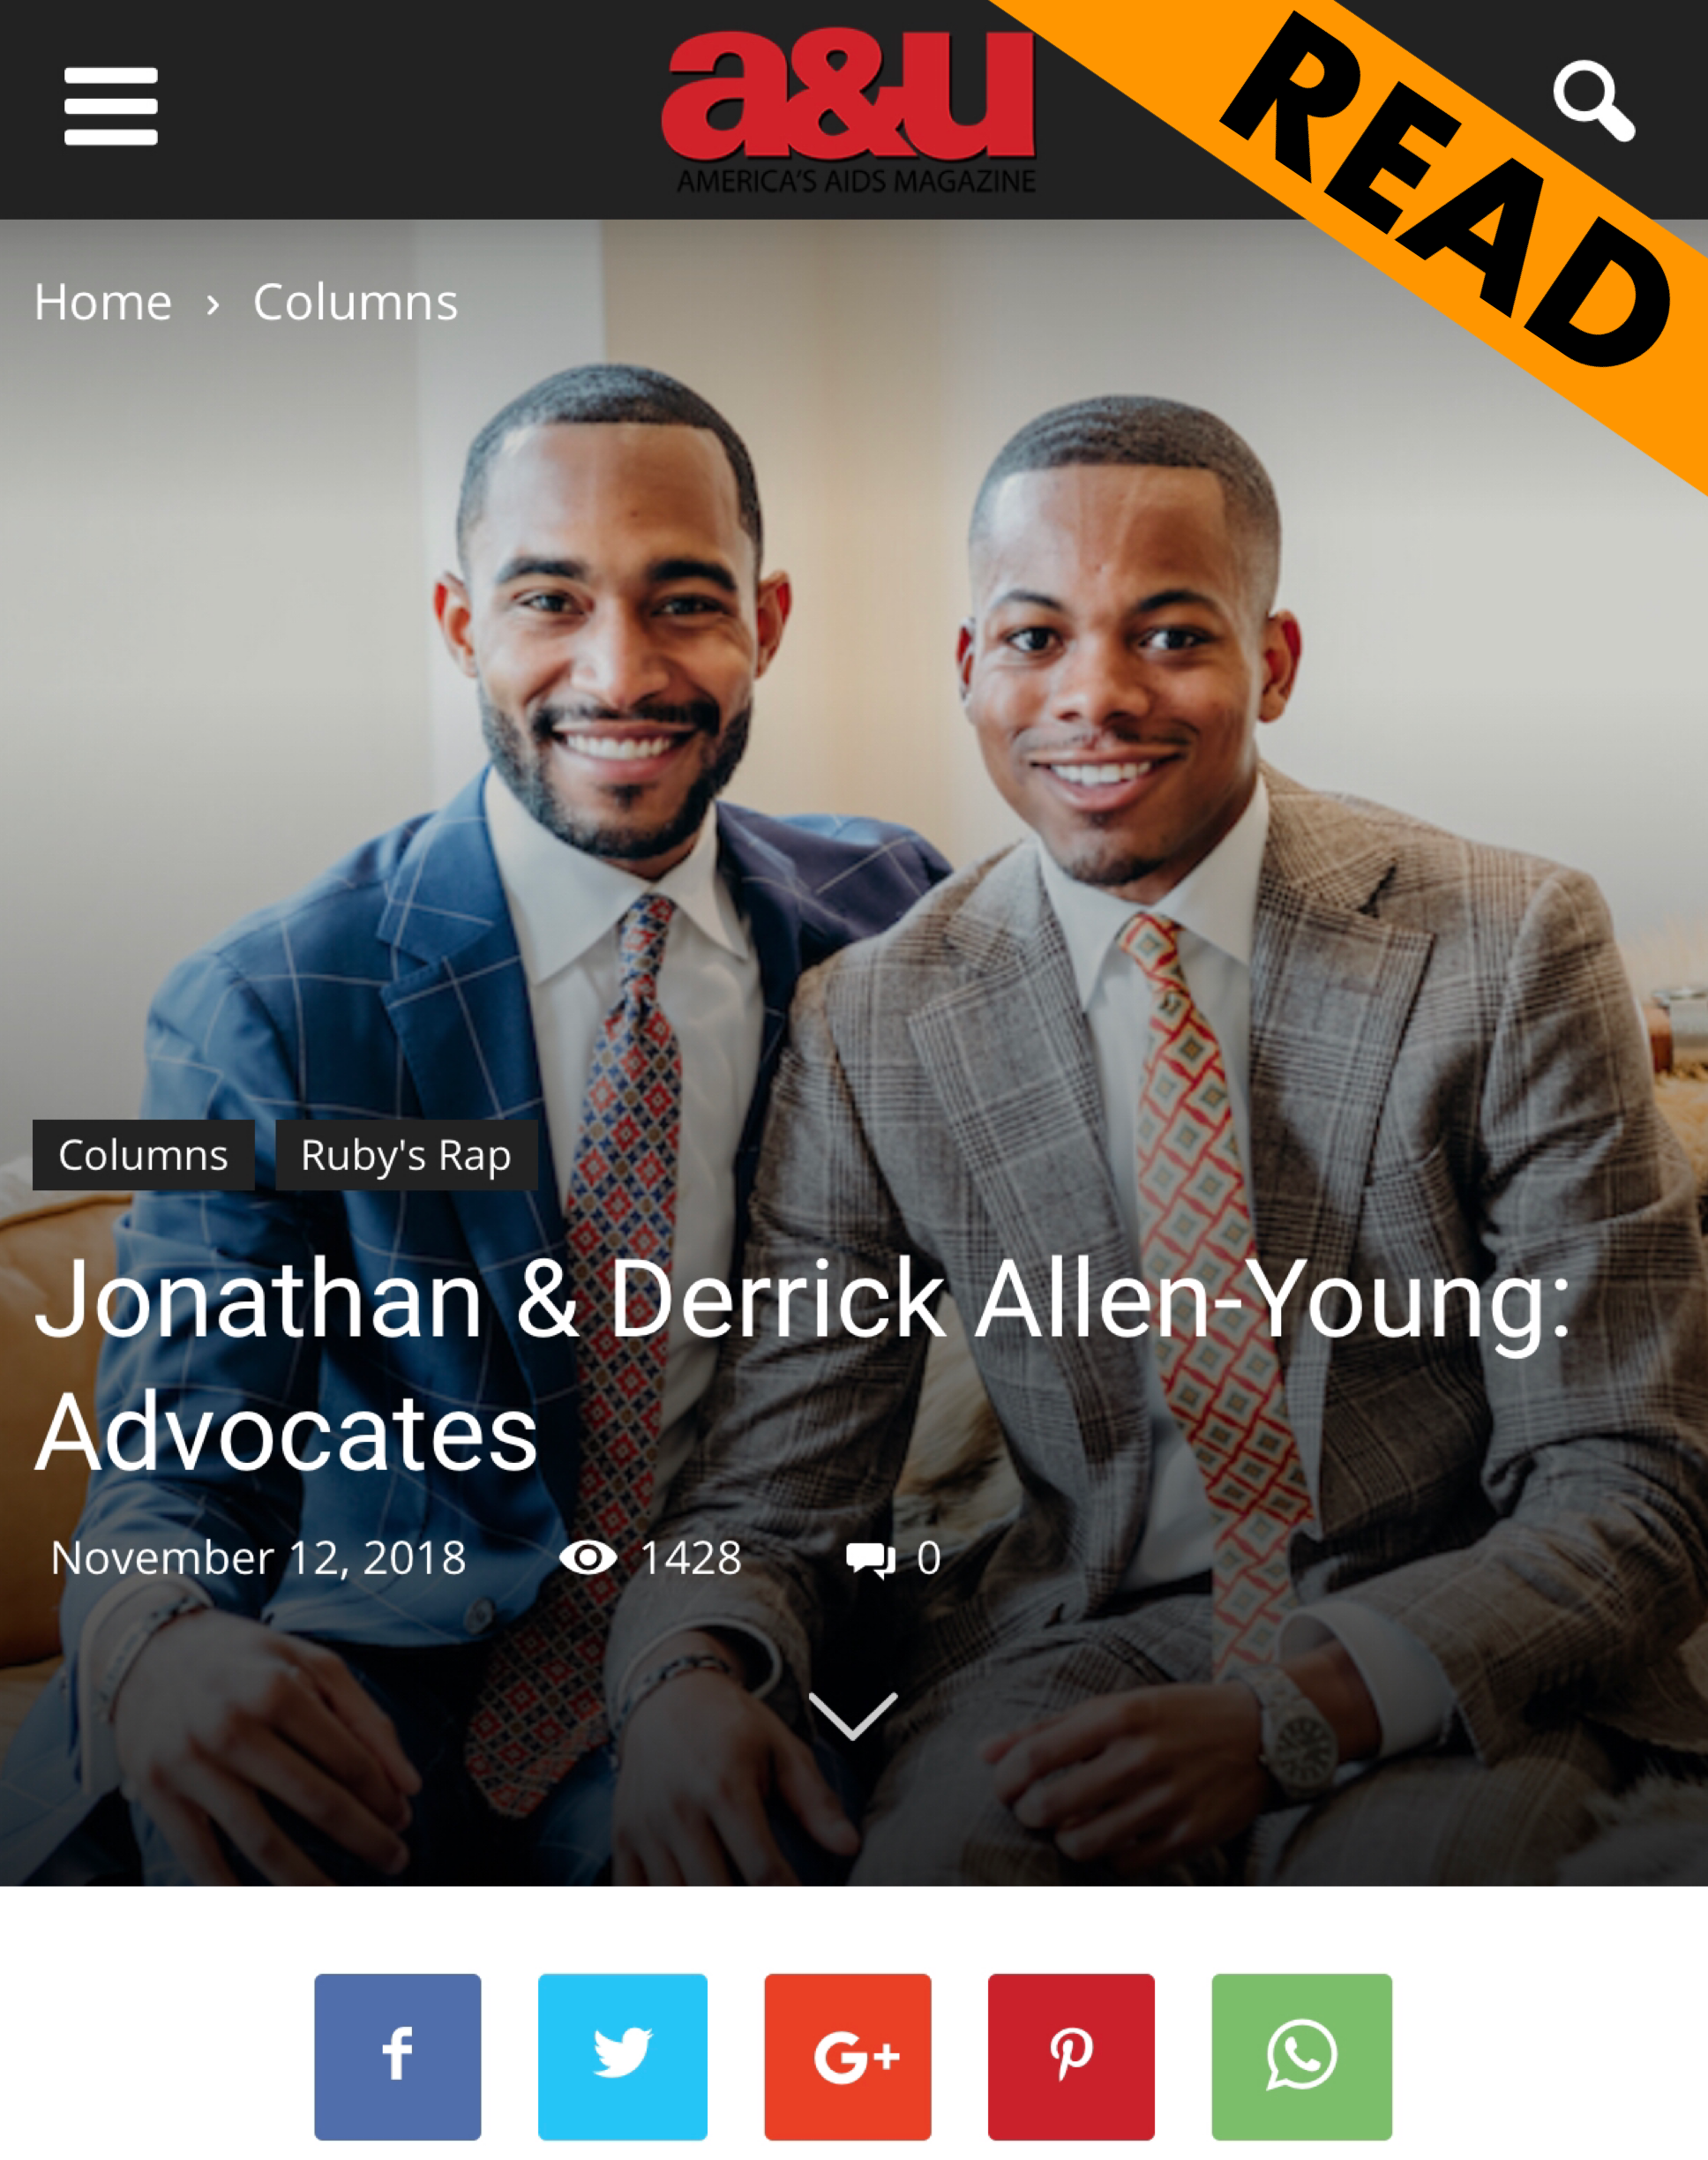 Advocates - Jonathan &amp; Derrick